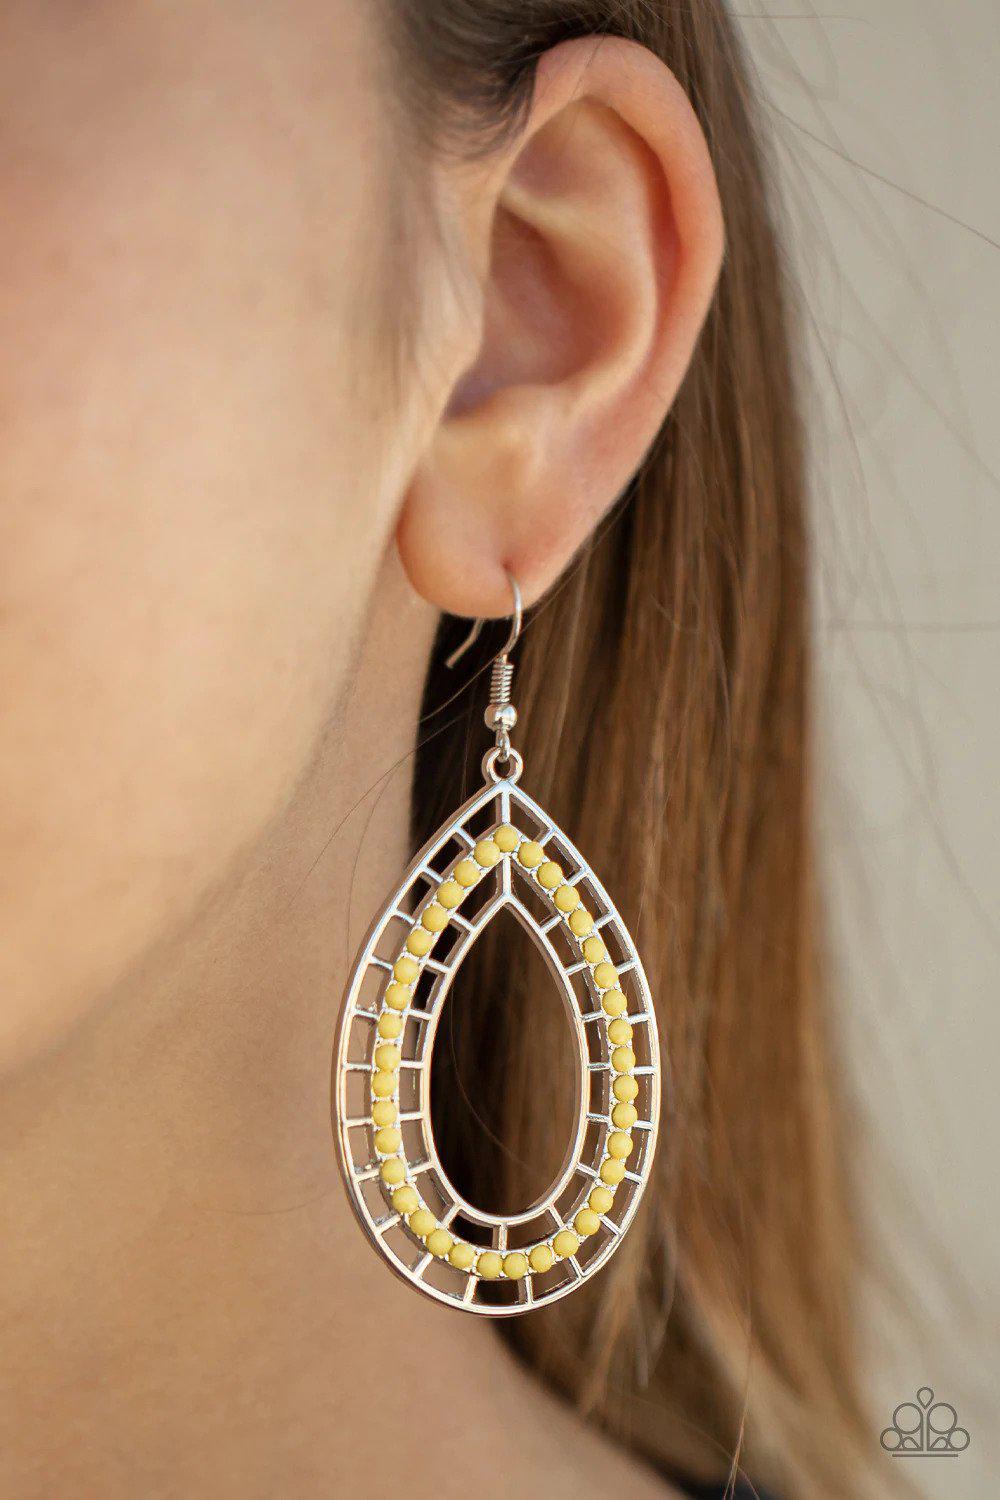 Fruity Fiesta Yellow Earrings - Paparazzi Accessories- on model - CarasShop.com - $5 Jewelry by Cara Jewels